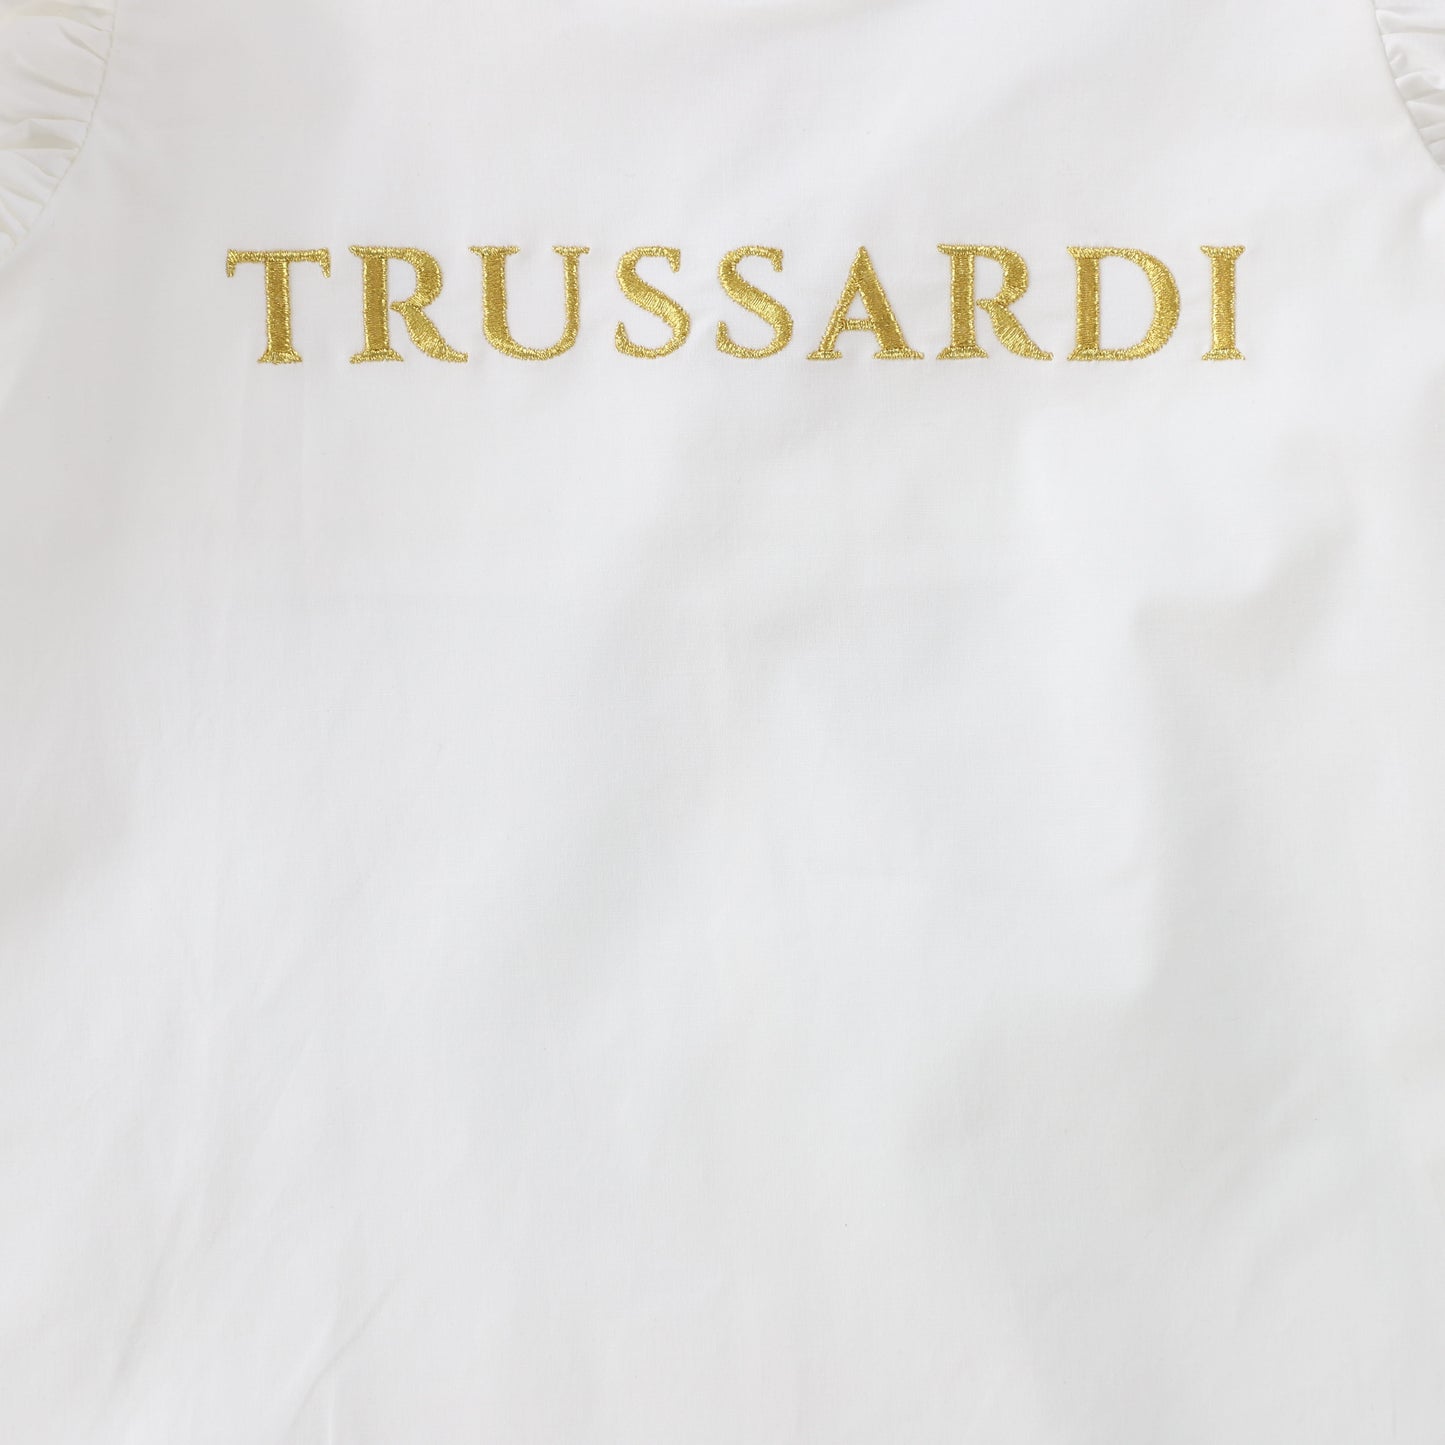 TRUSSARDI WHITE RUFFLE DRESS [Final Sale]